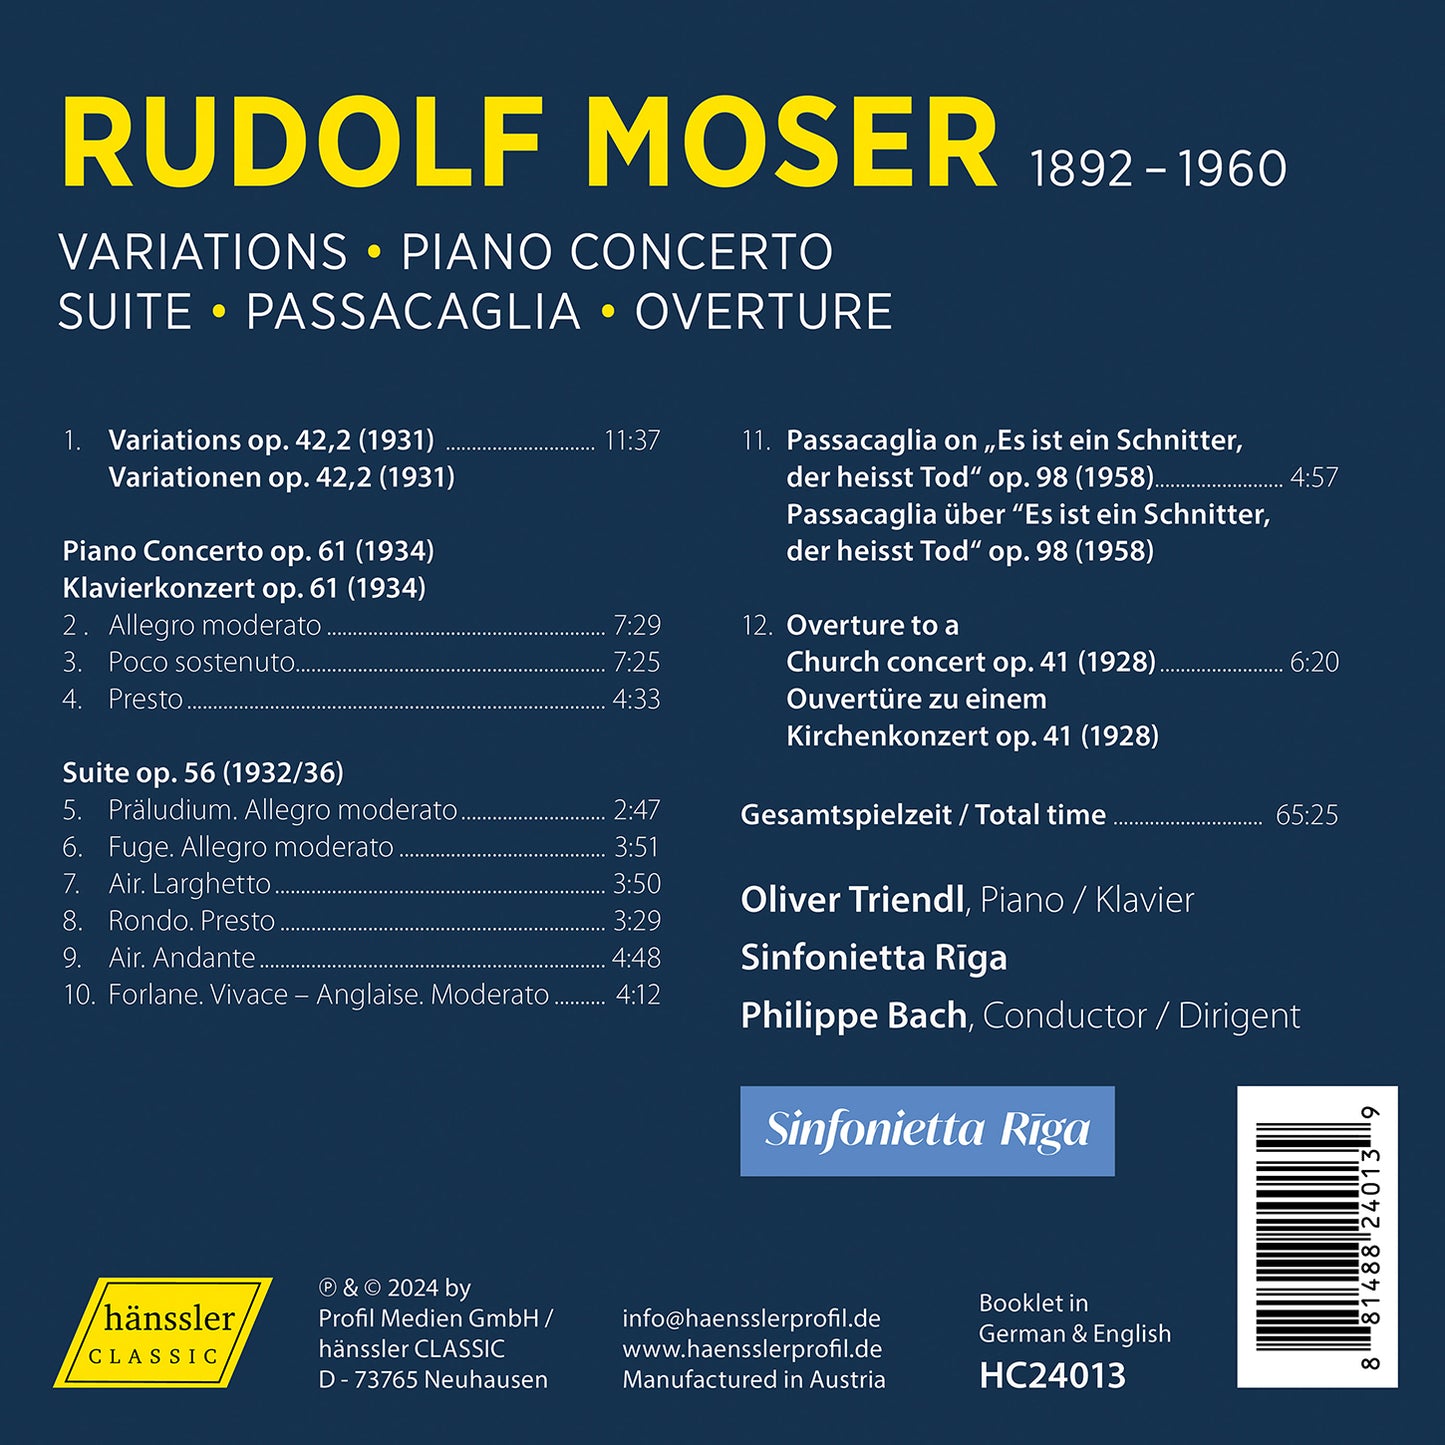 Moser: Rudolf Moser  Oliver Triendl, Sinfonietta Riga